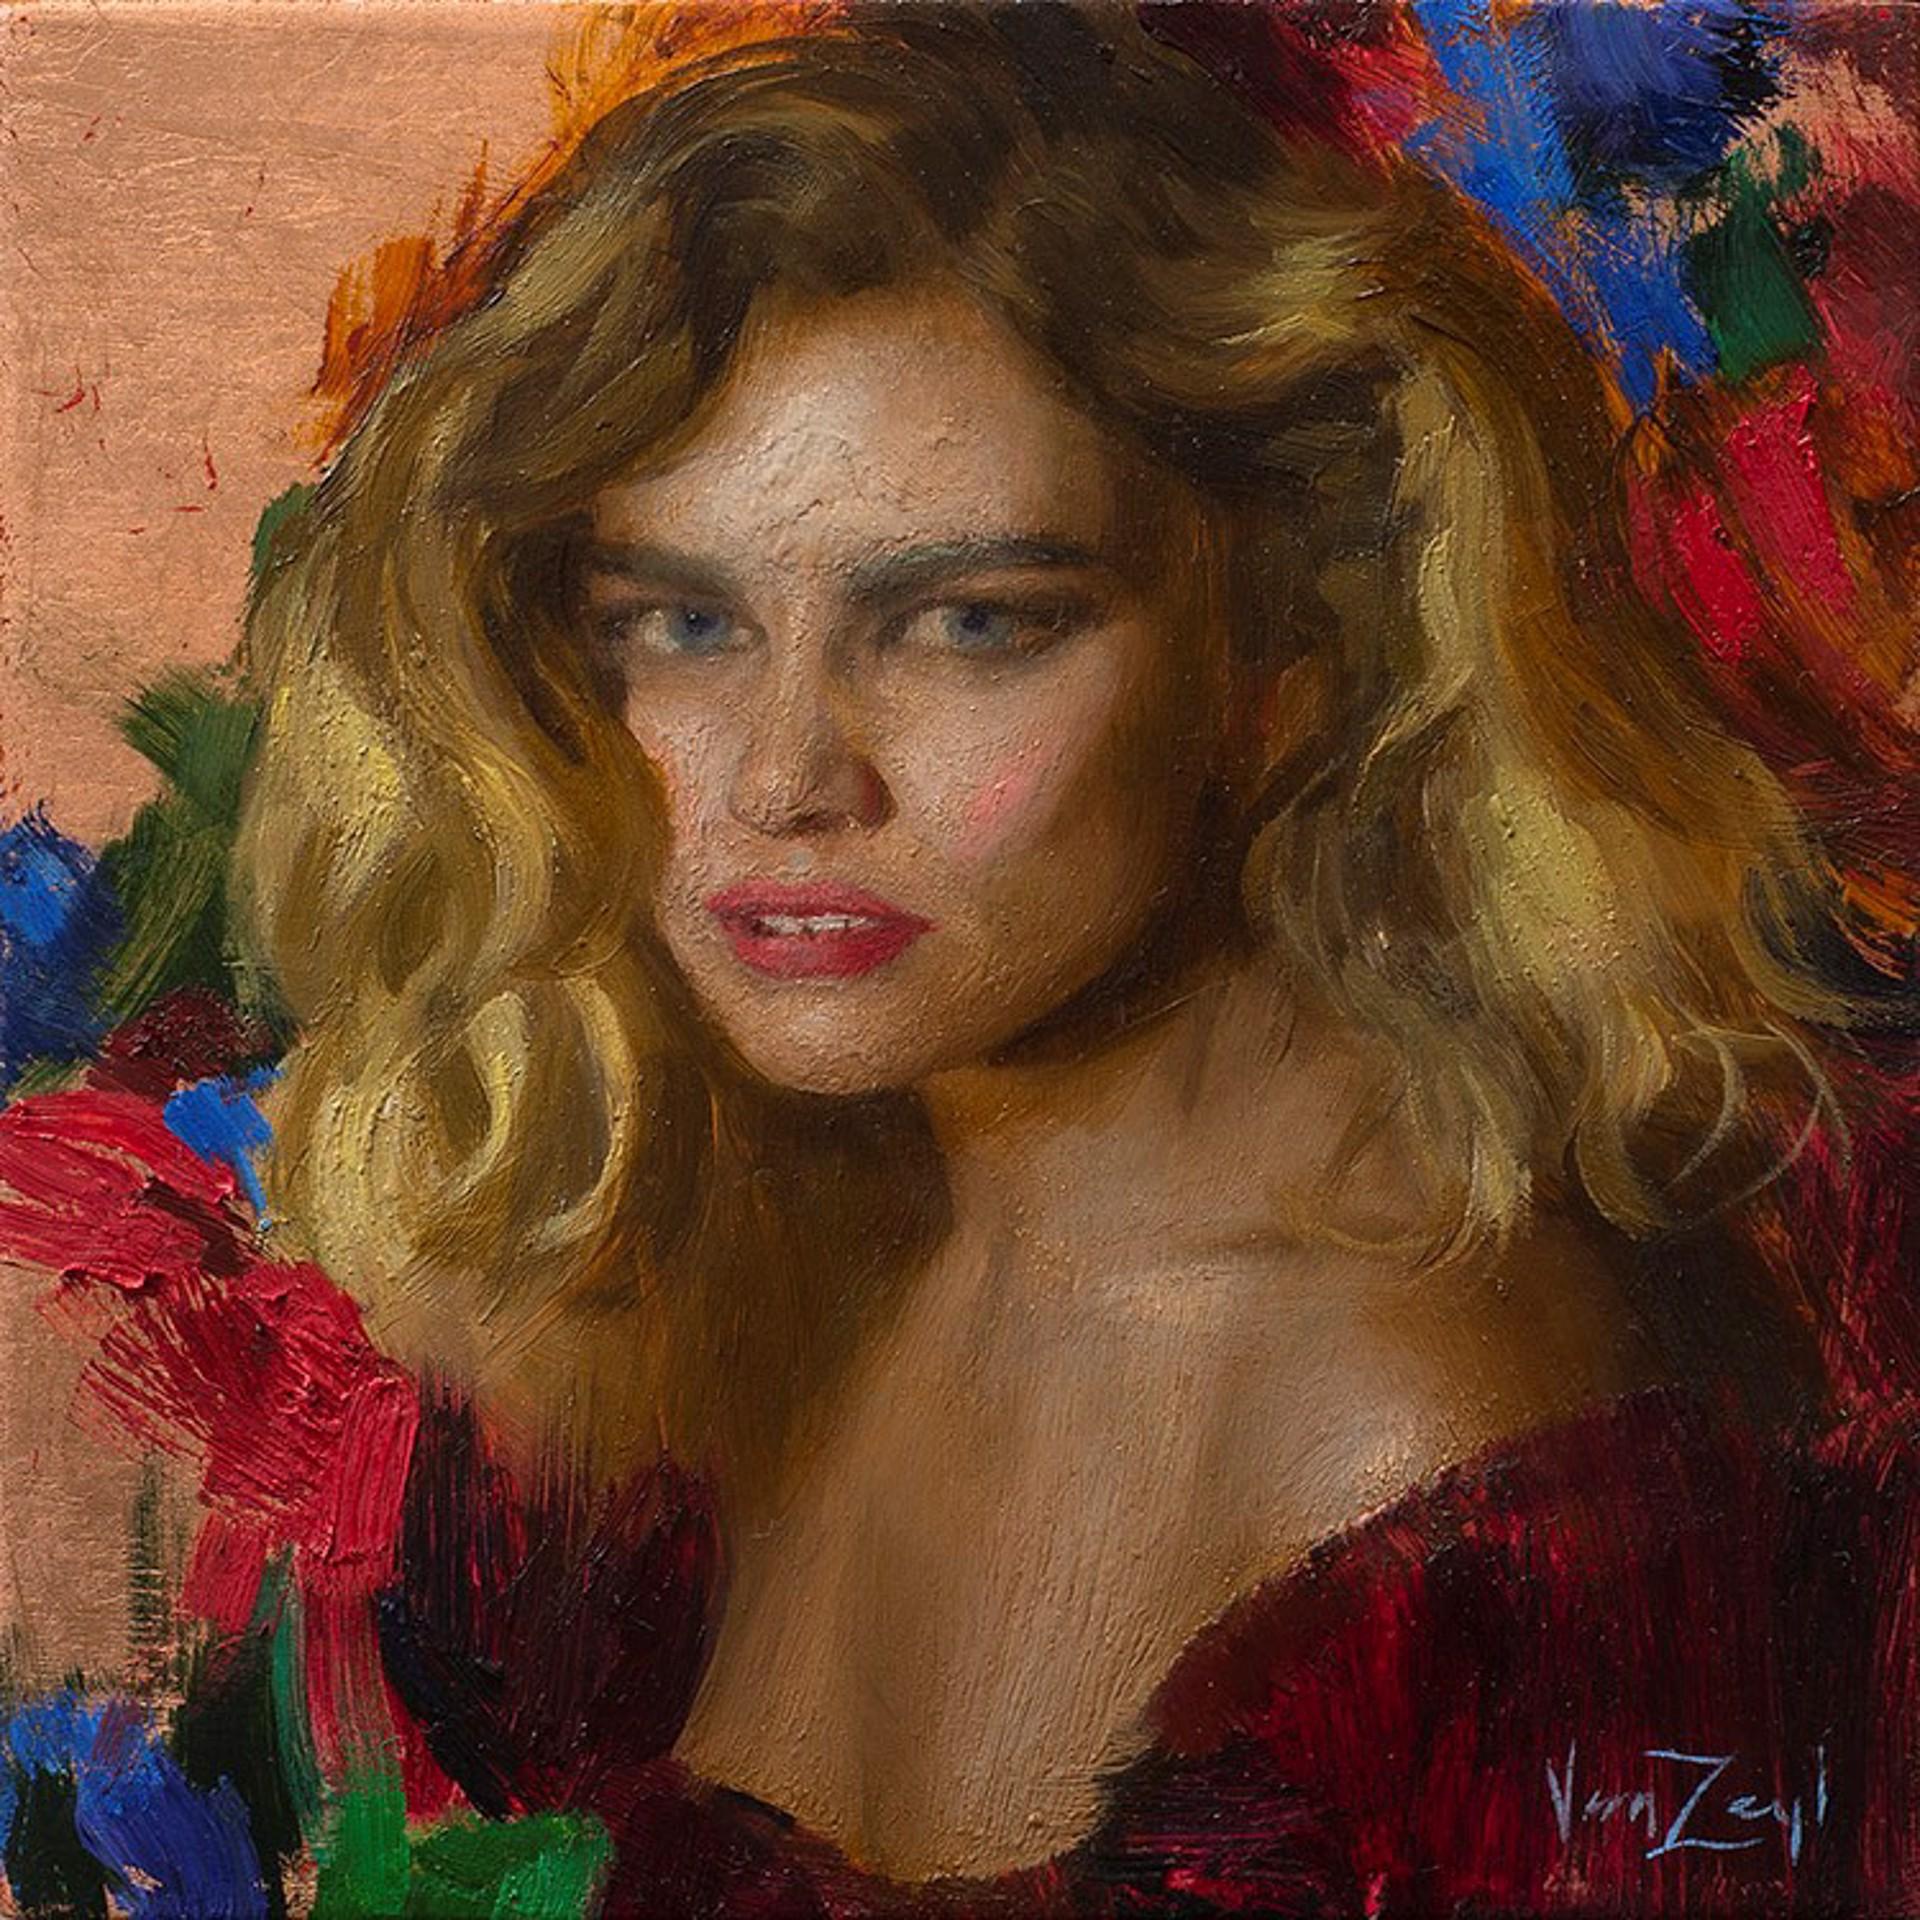 Sara in Red - Art by Michael Van Zeyl